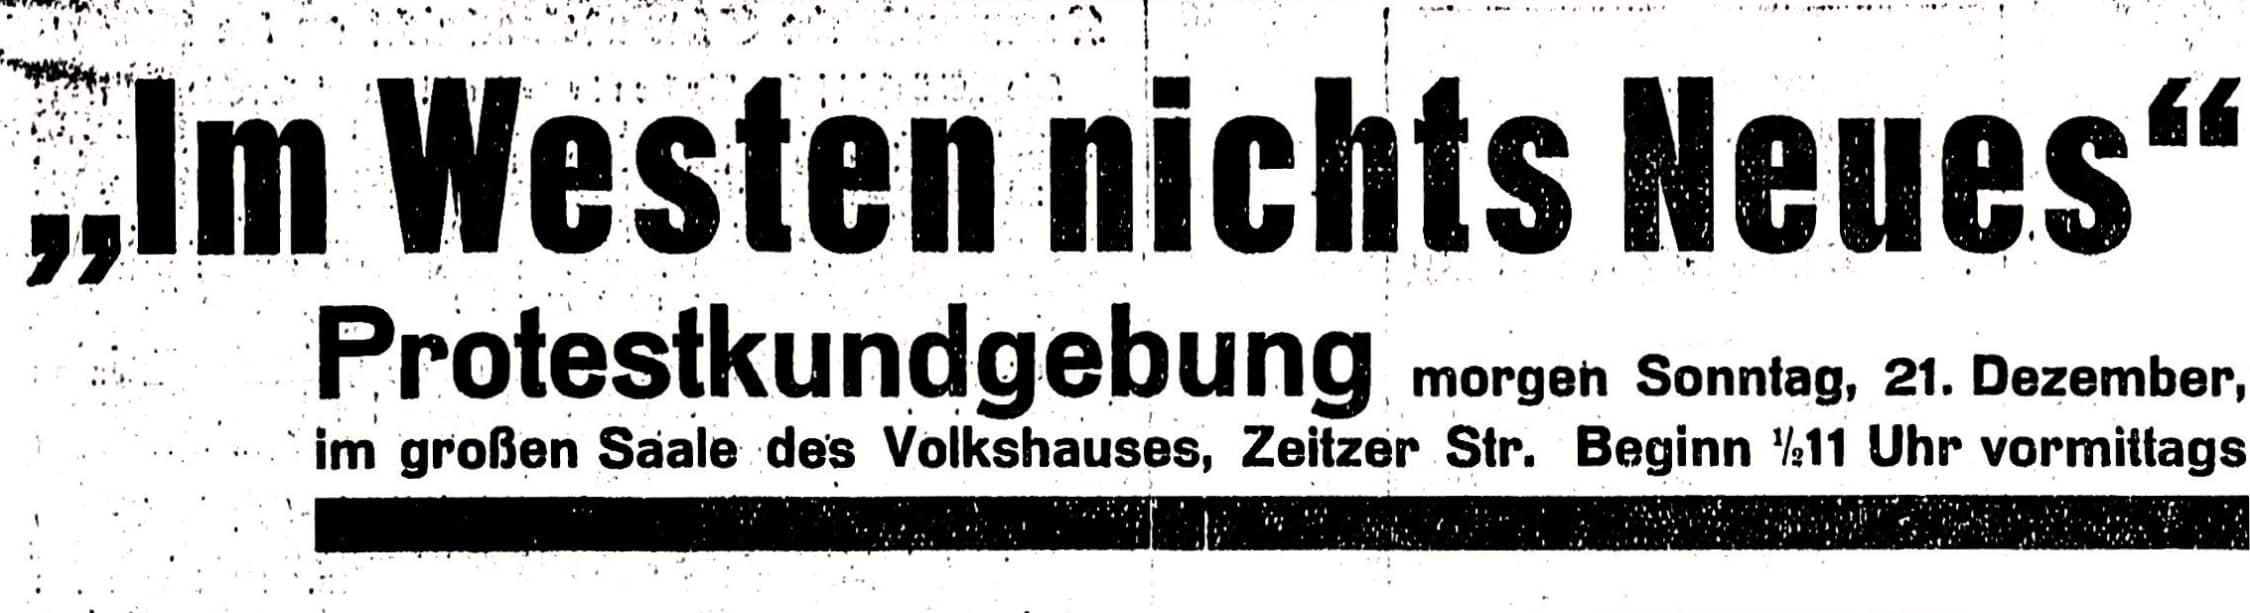 Zeitungsannonce vom 20. Dezember 1930. Foto: Peter Uhrbach